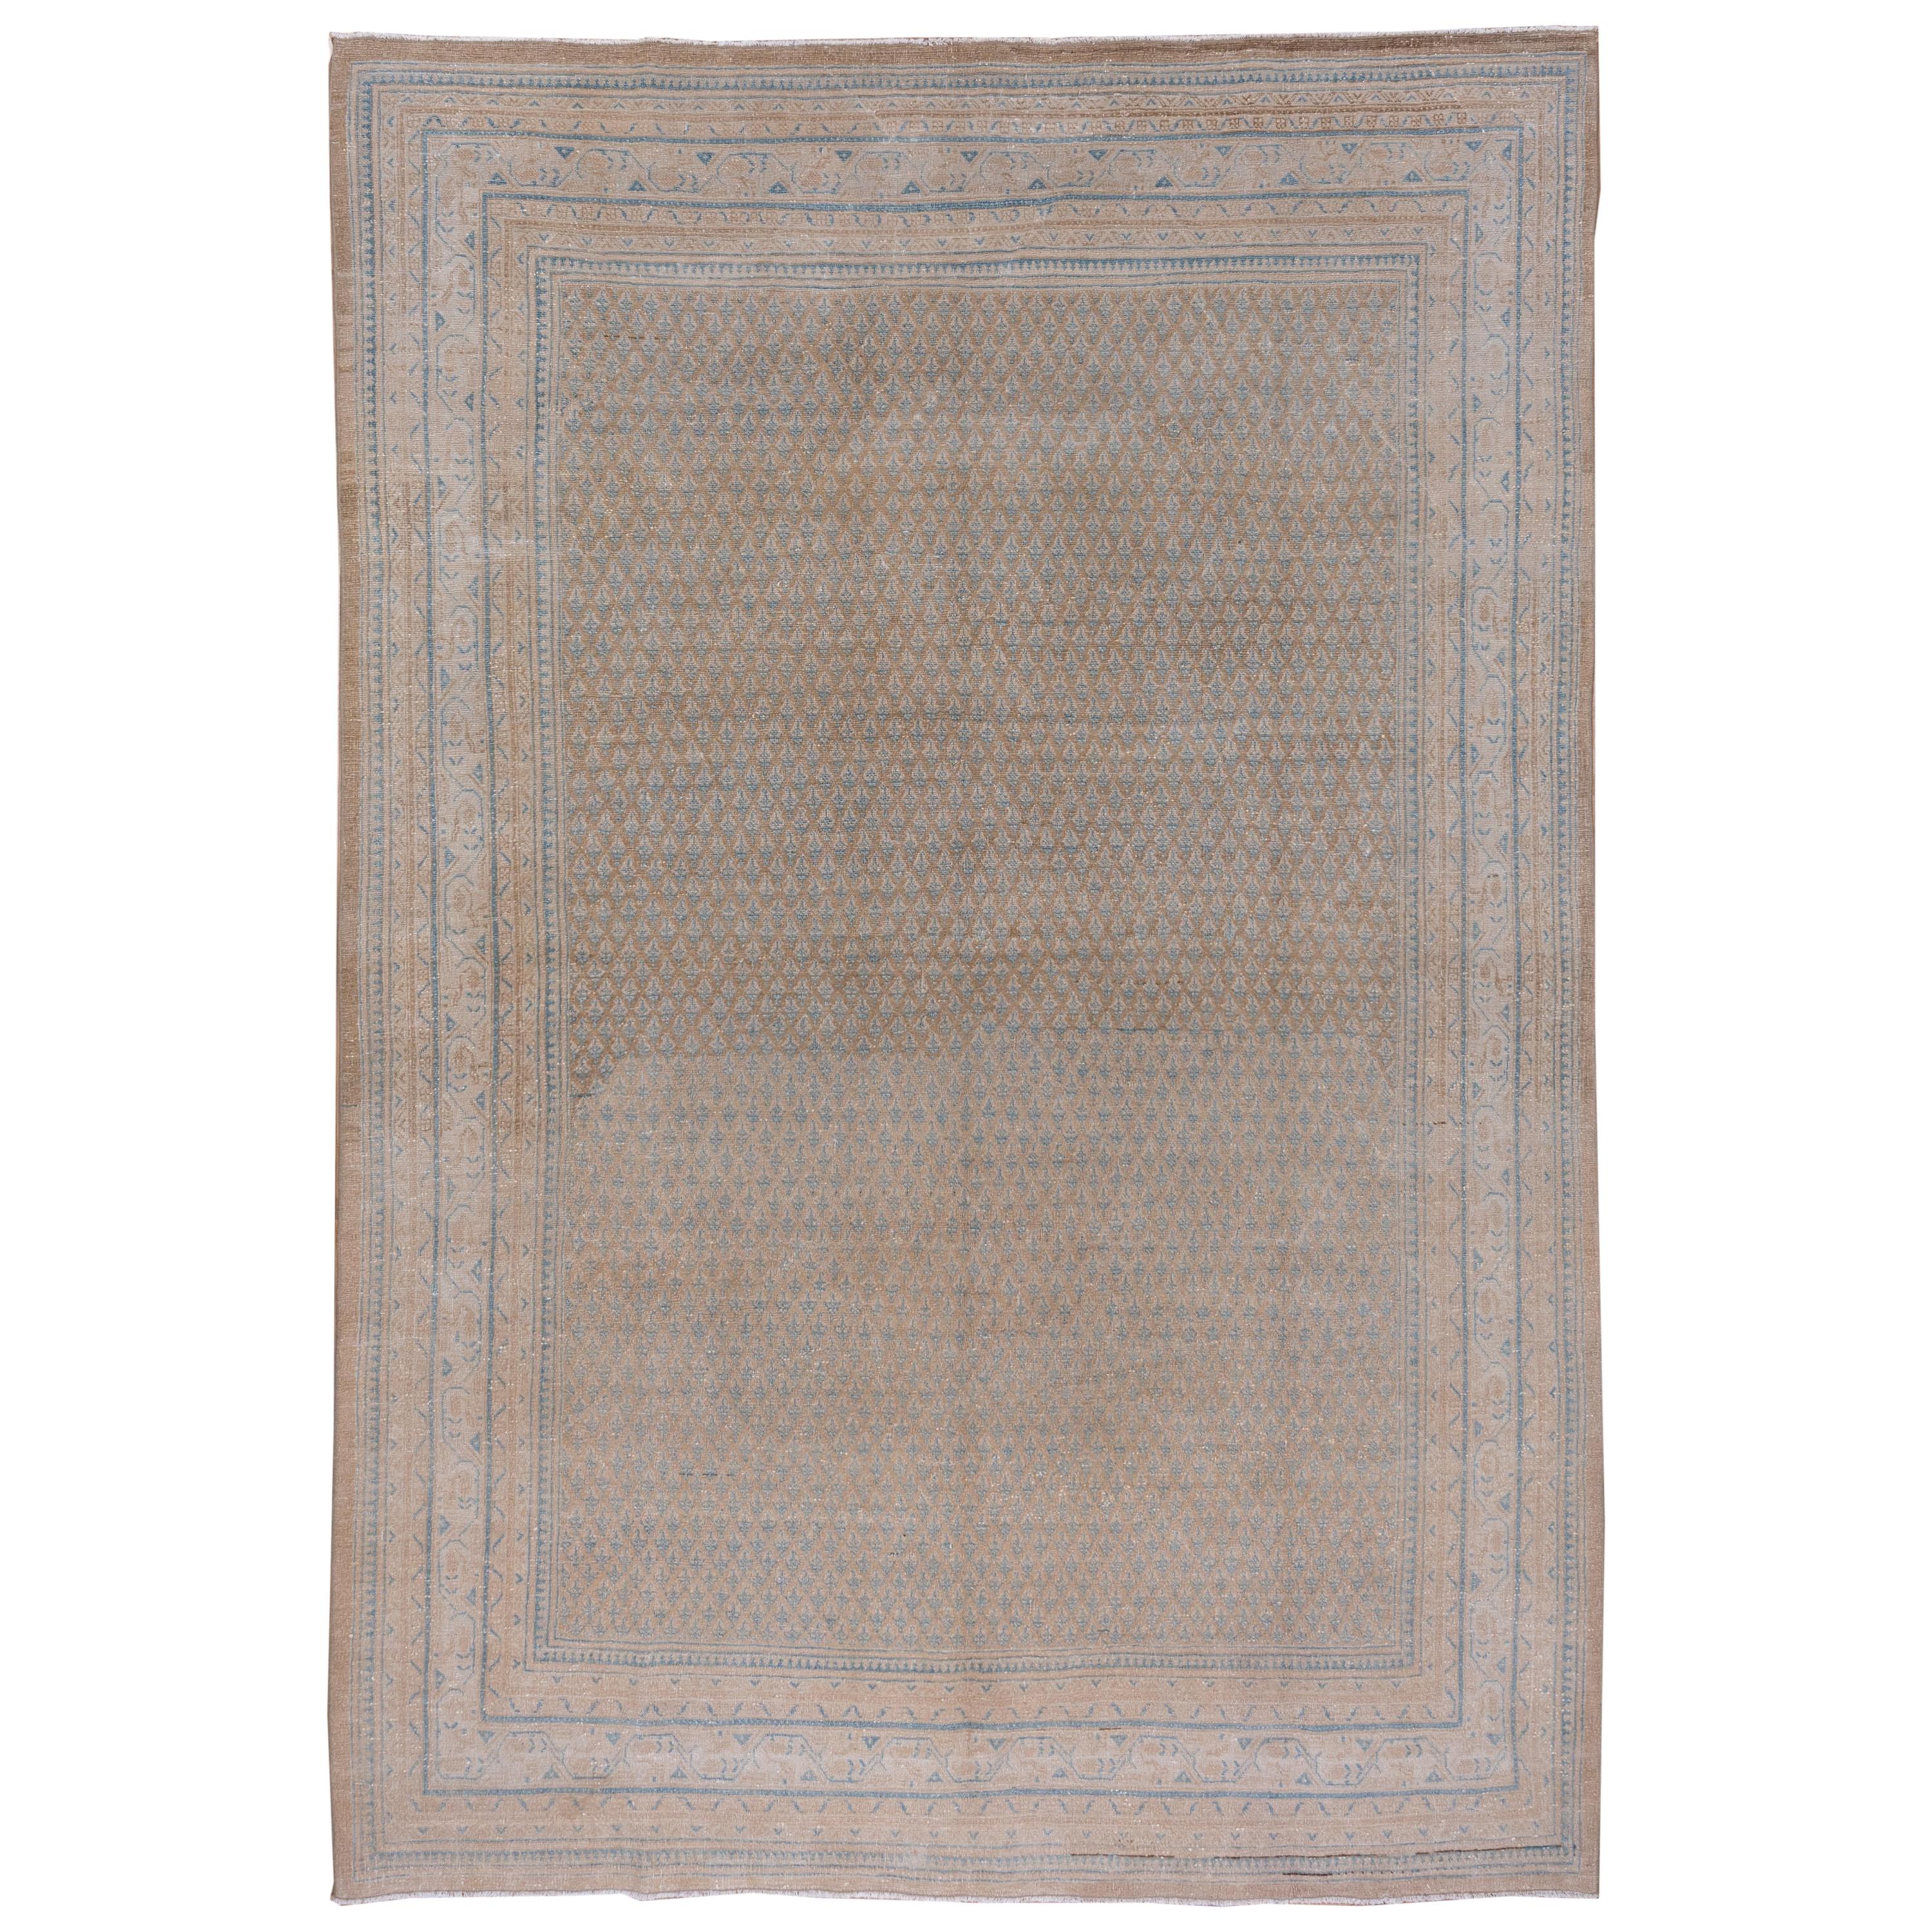 Midcentury Mahal Carpet, Neutral Palete, Blue Accents For Sale